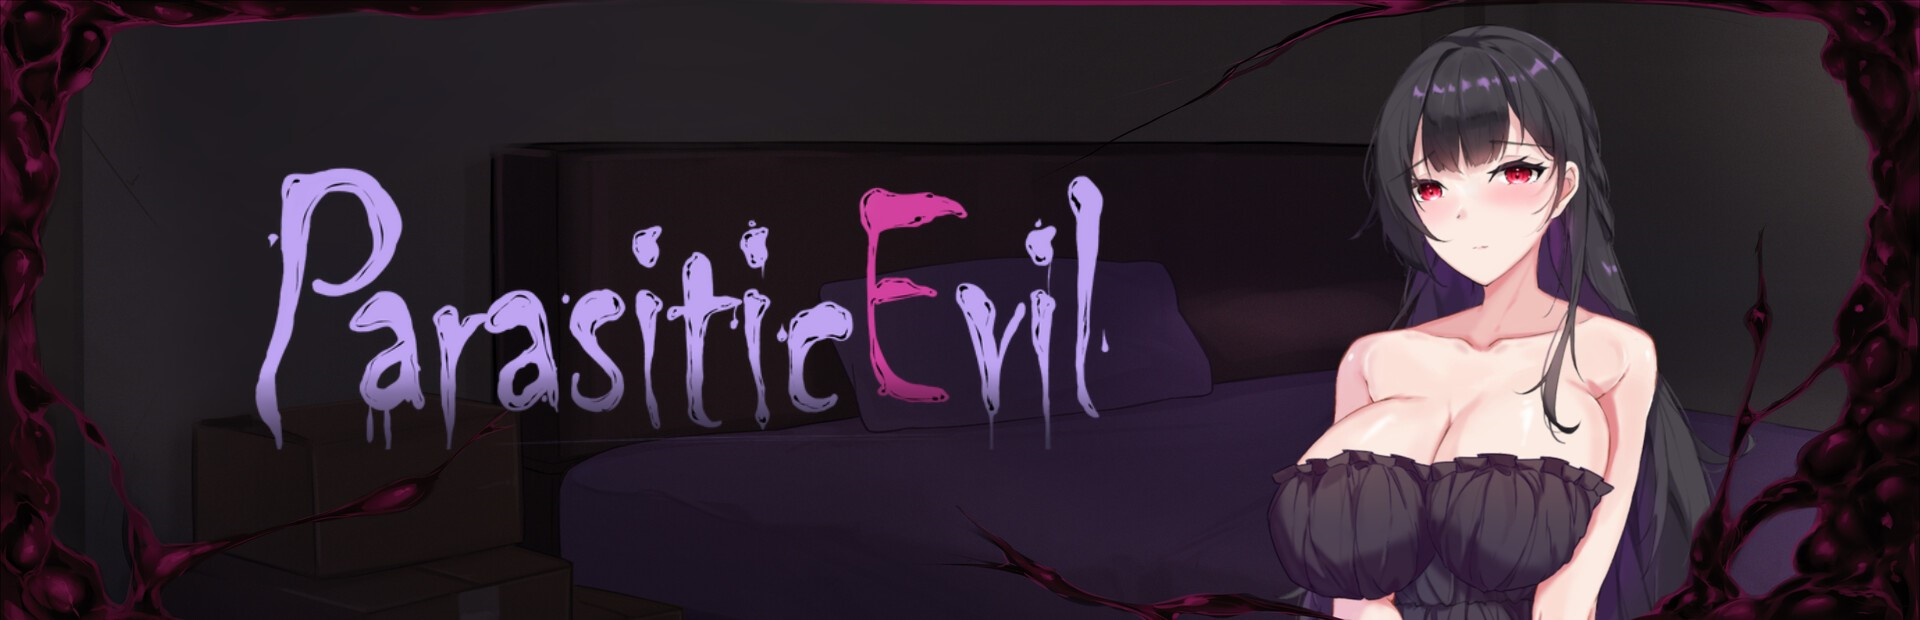 Parasitic Evil poster